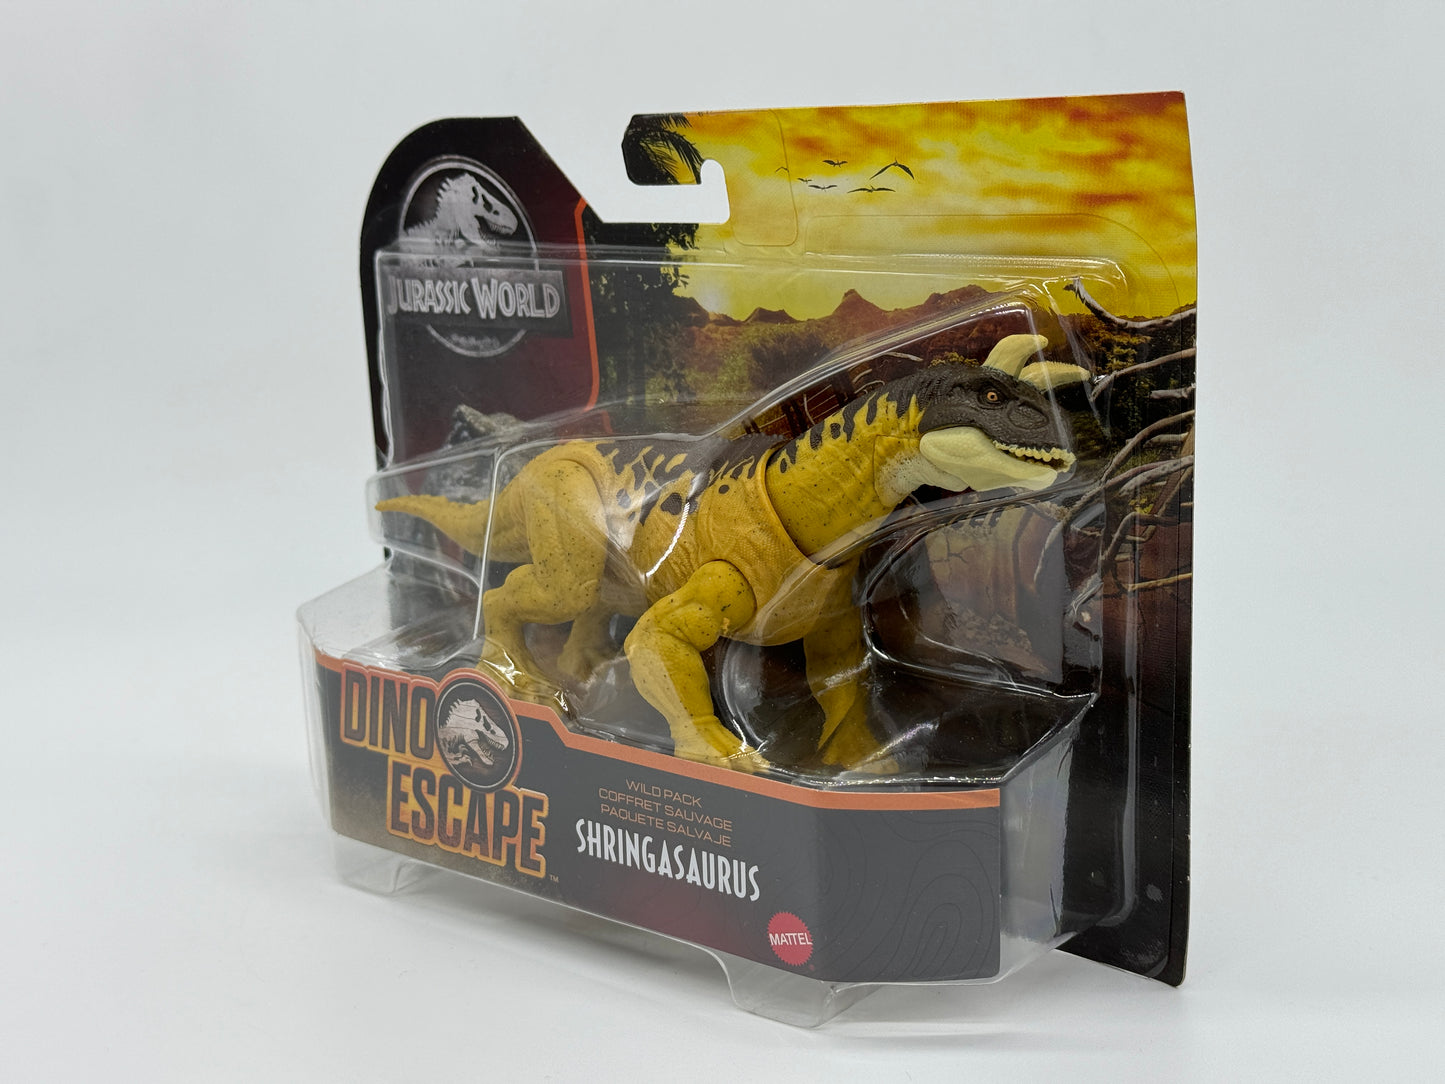 Jurassic World Dino Escape Wild Pack "Shringasaurus" Wildnis Set Wave 3